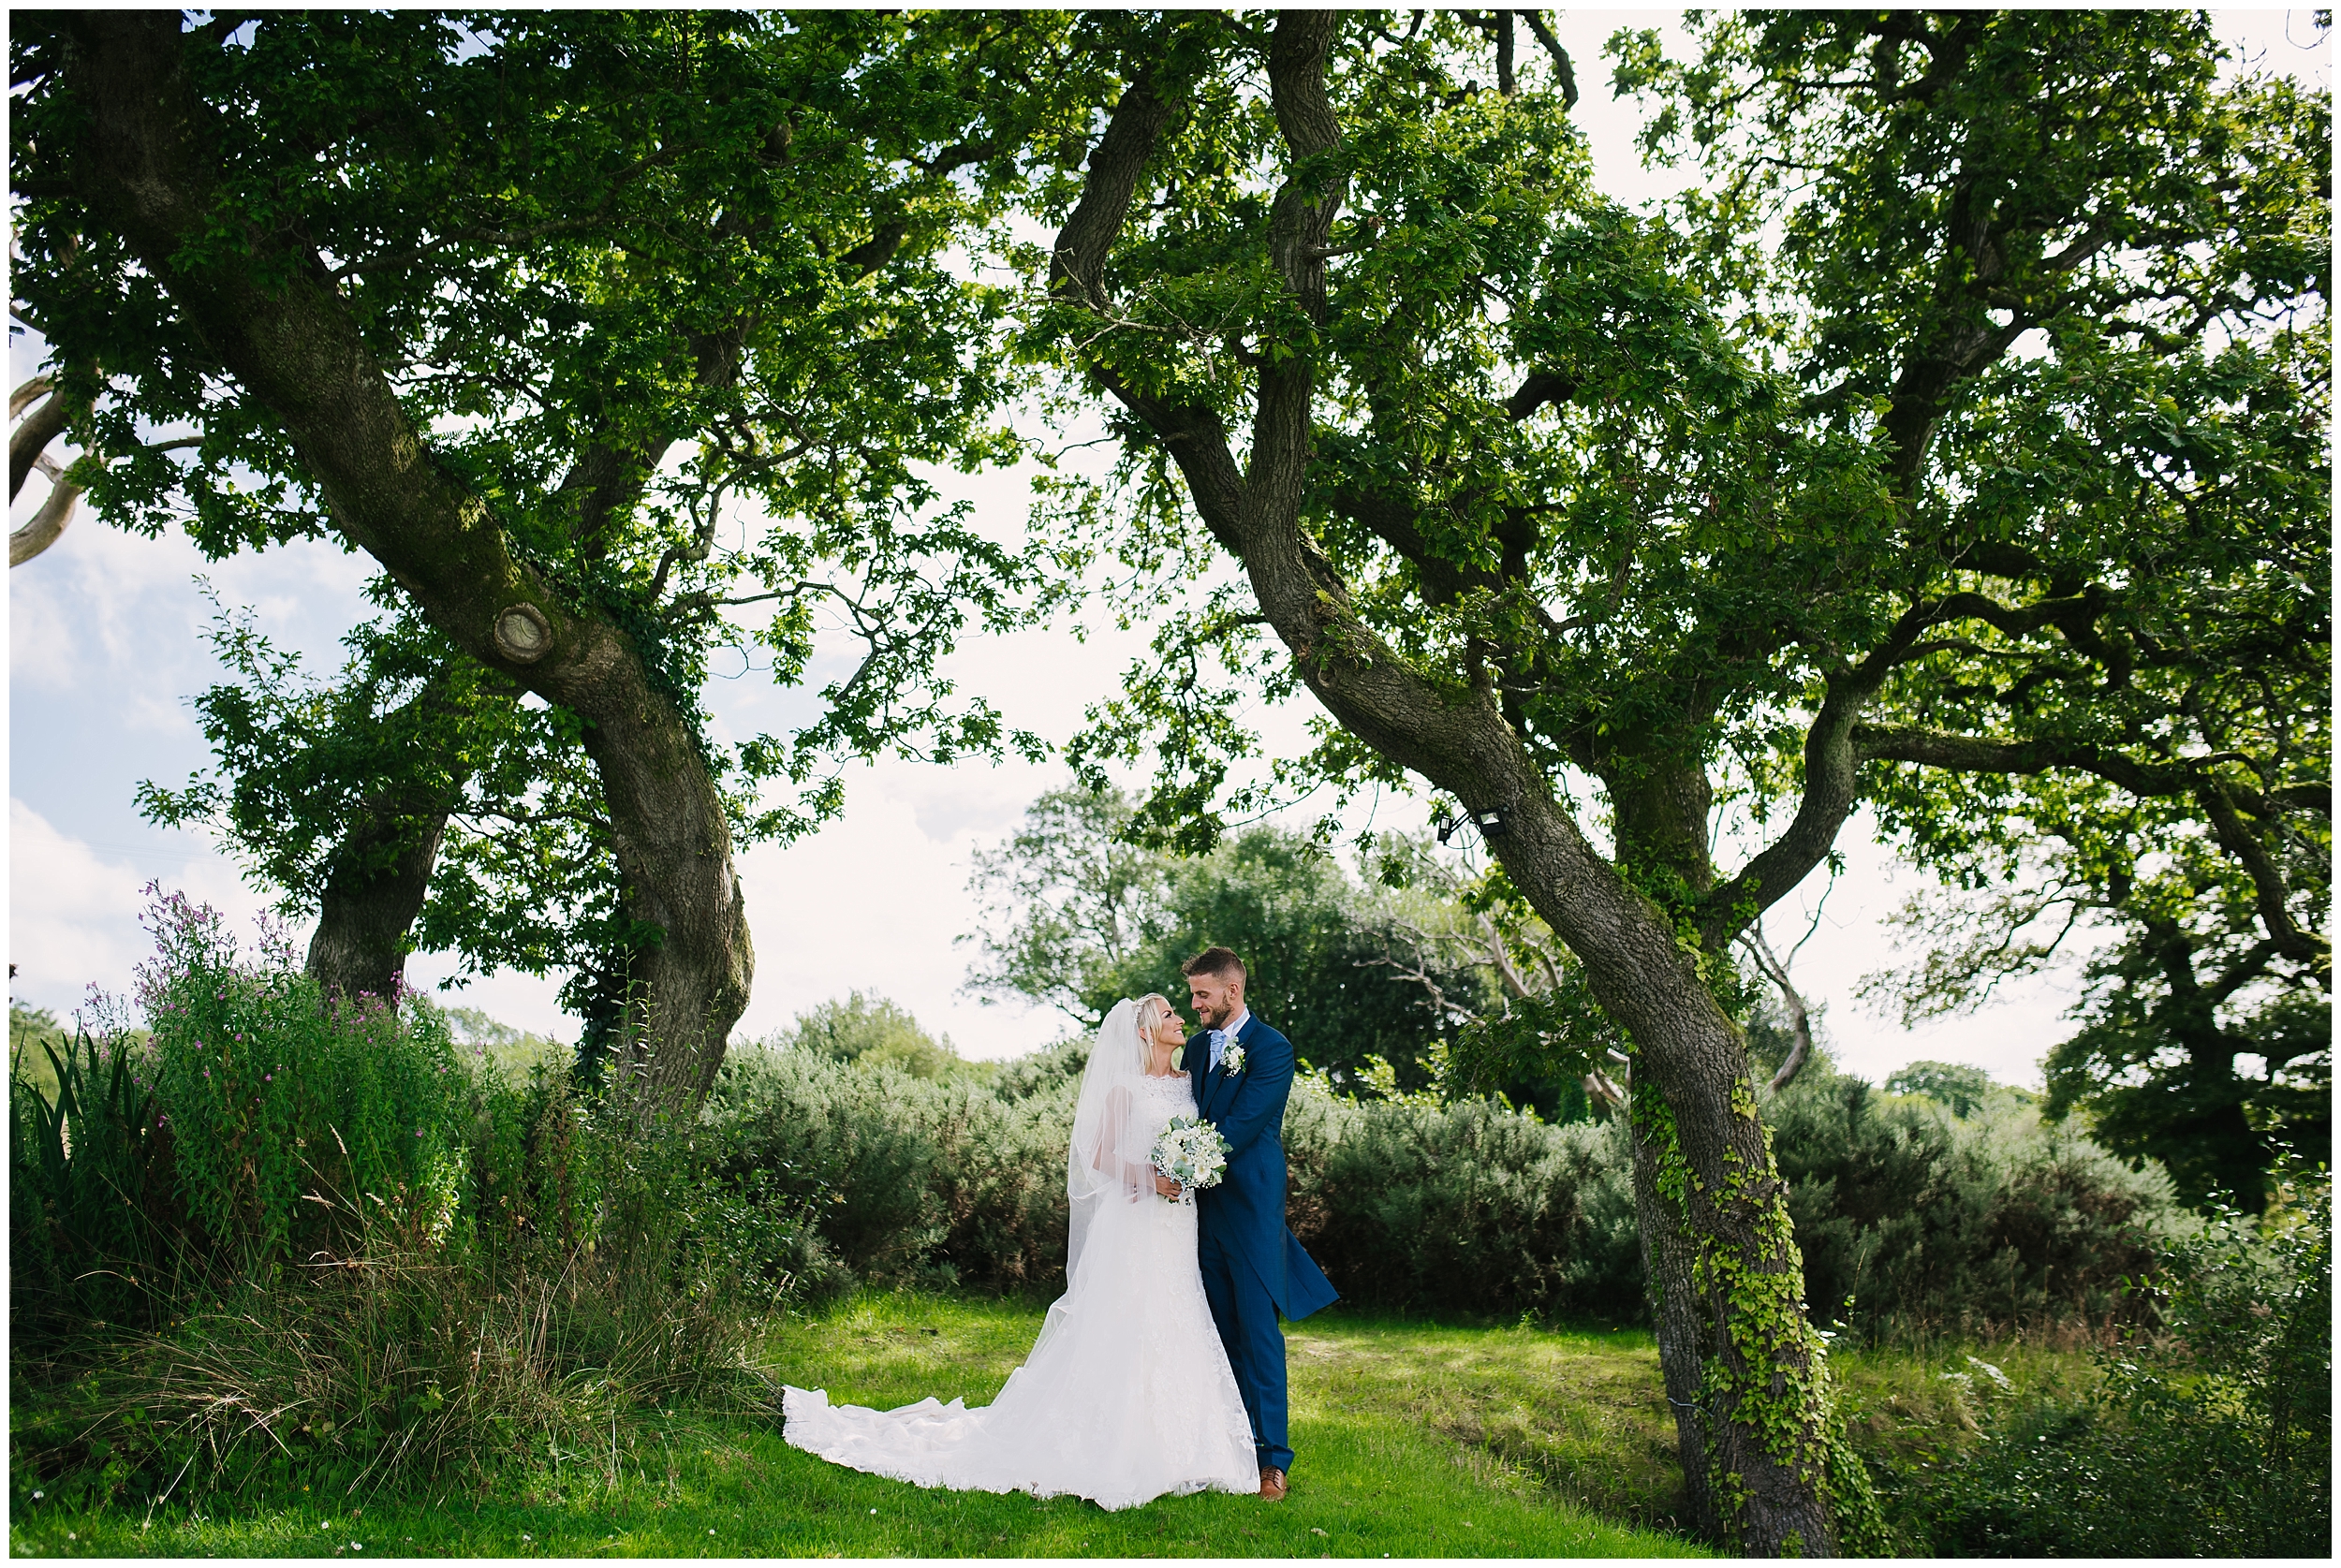 Bride and groom under trees at Oldwalls Gower wedding venue